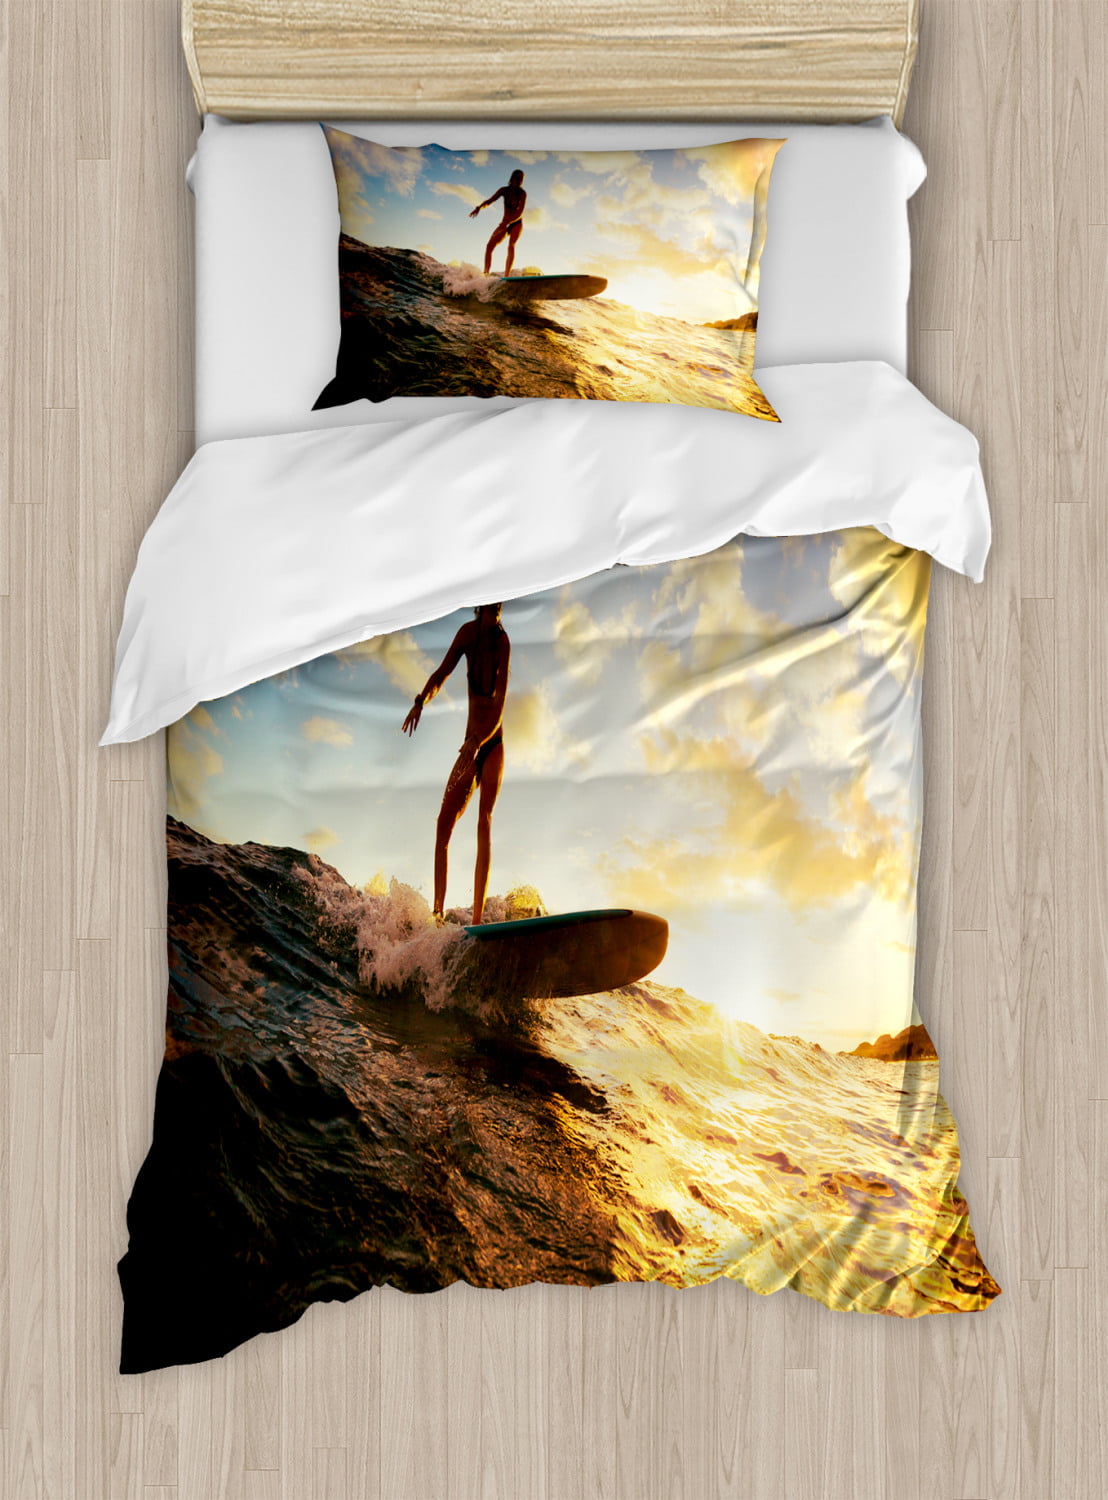 Details about   Zodiac Virgo Pillow Sham Decorative Pillowcase 3 Sizes for Bedroom Decor 